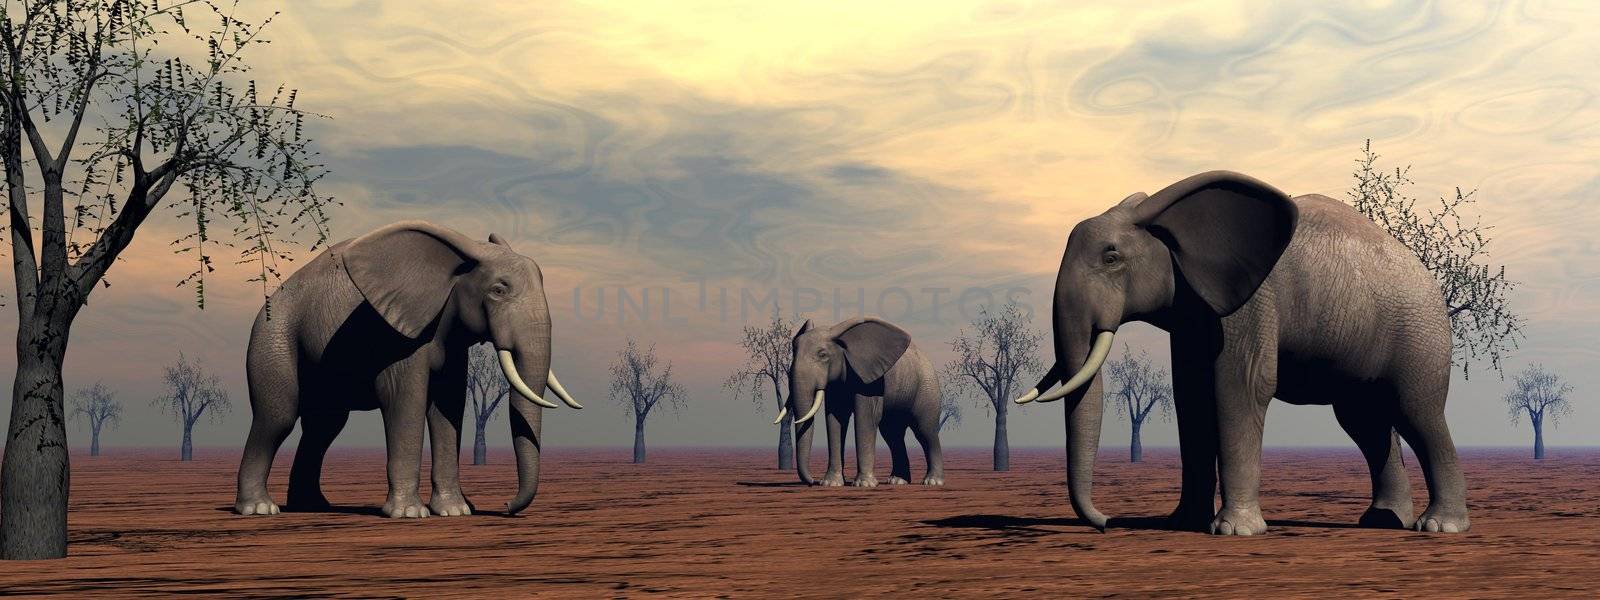 Three elephants standing between baobabs in the savannah by morning light